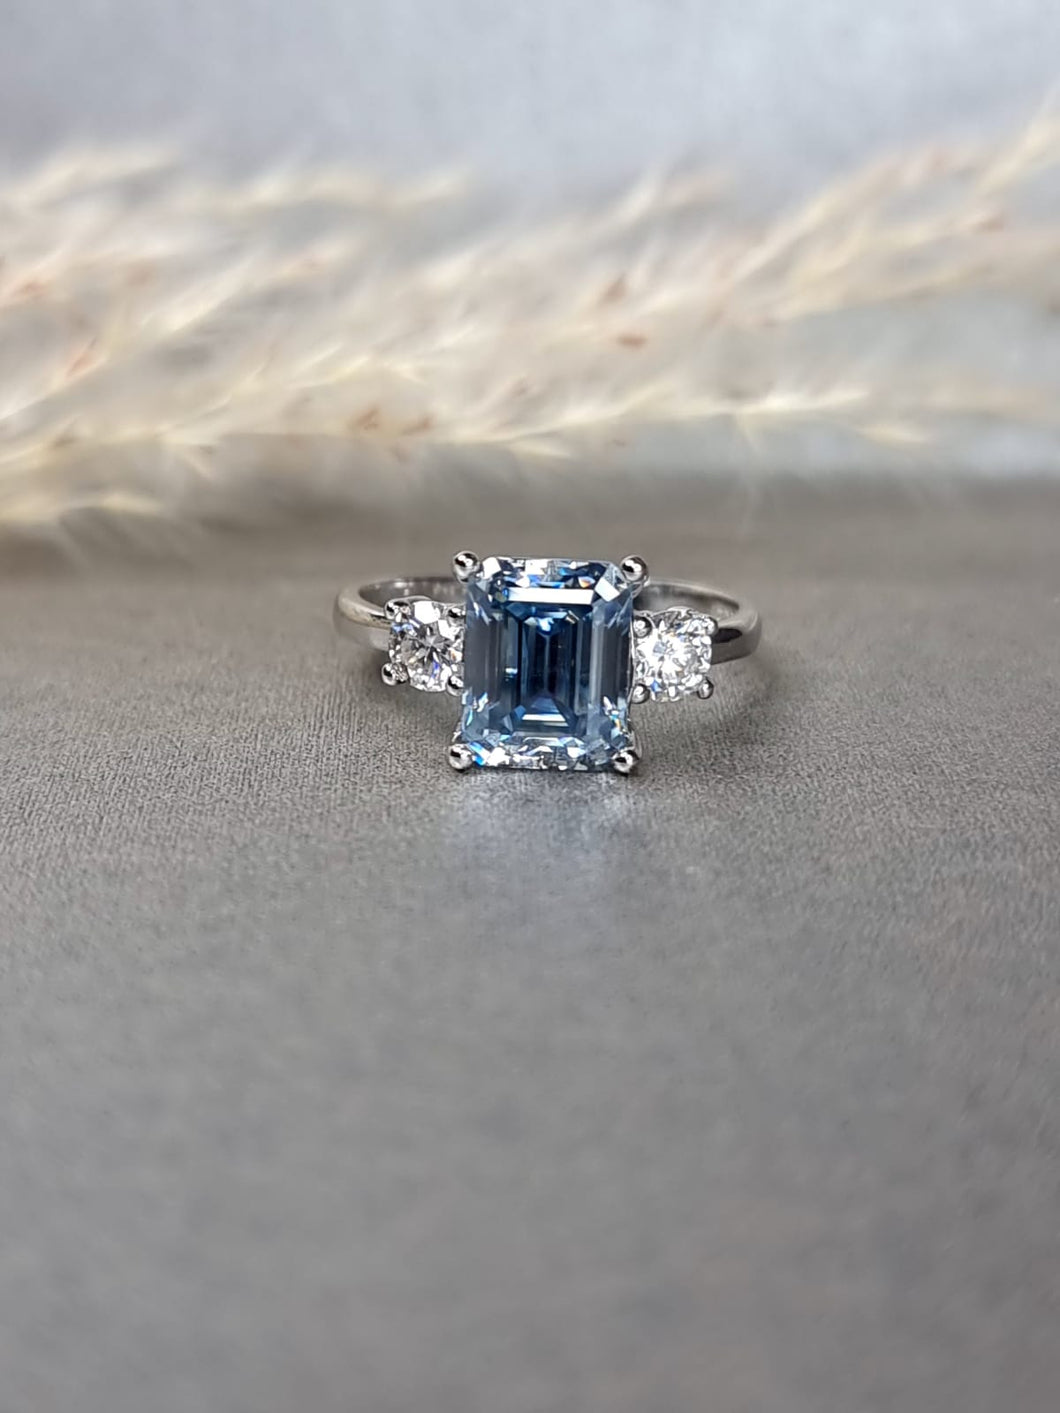 3.00ct Vivid Blue Emerald Cut Moissanite Diamond With Side Stone Ring